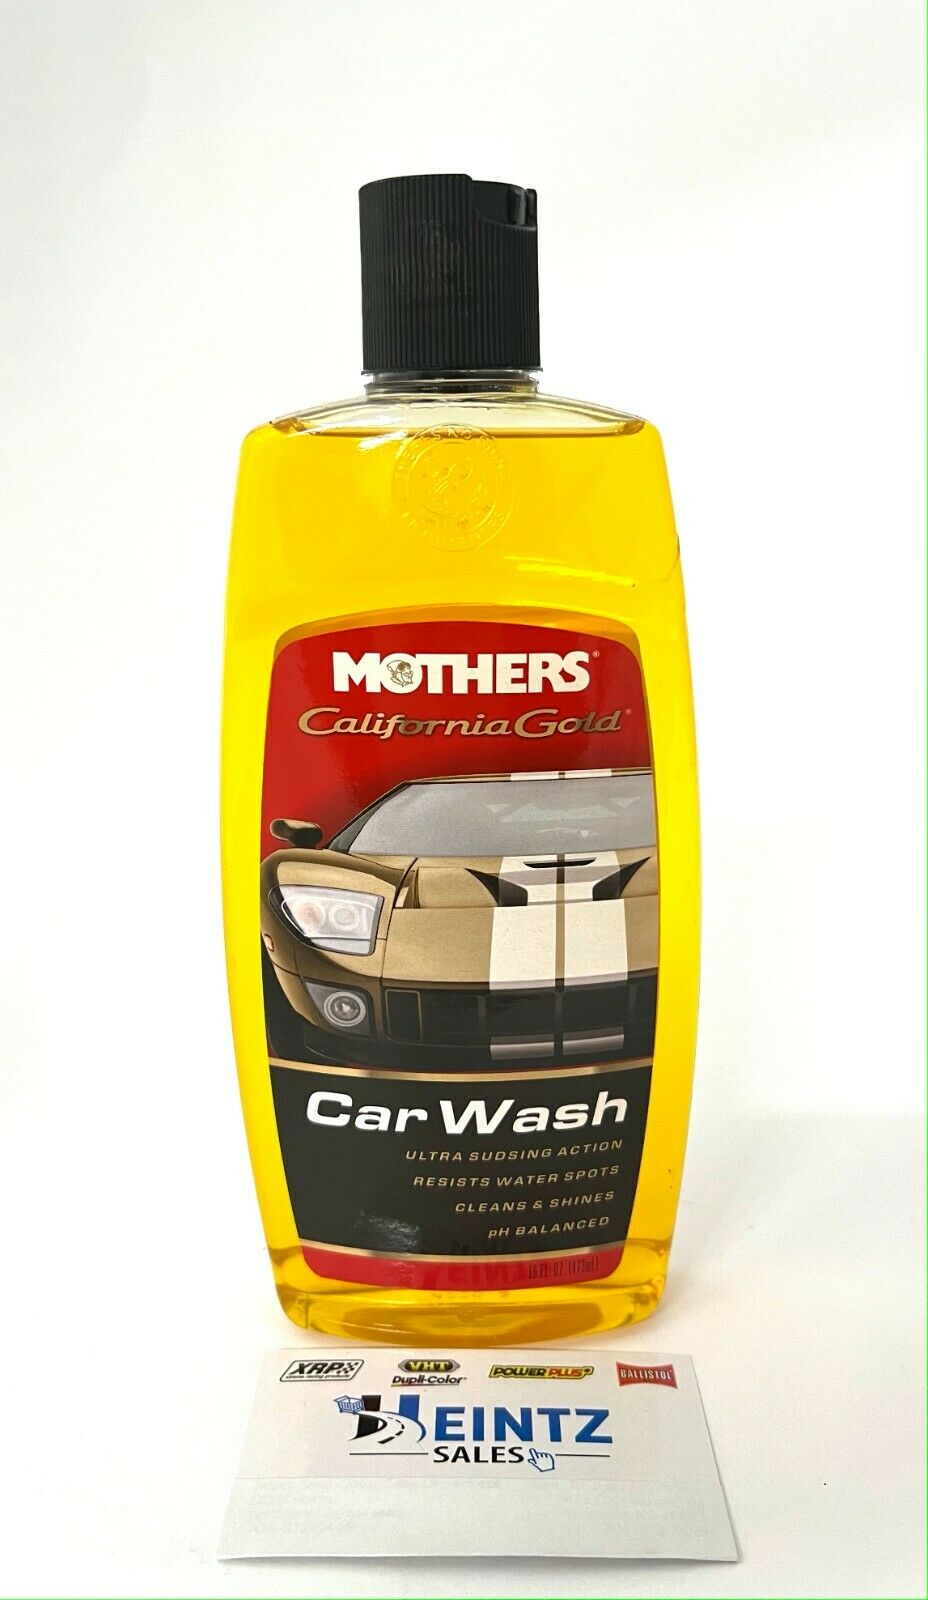 MOTHERS 05600 California Gold Car Wash - Resists water spots - pH balanced - 16 oz.